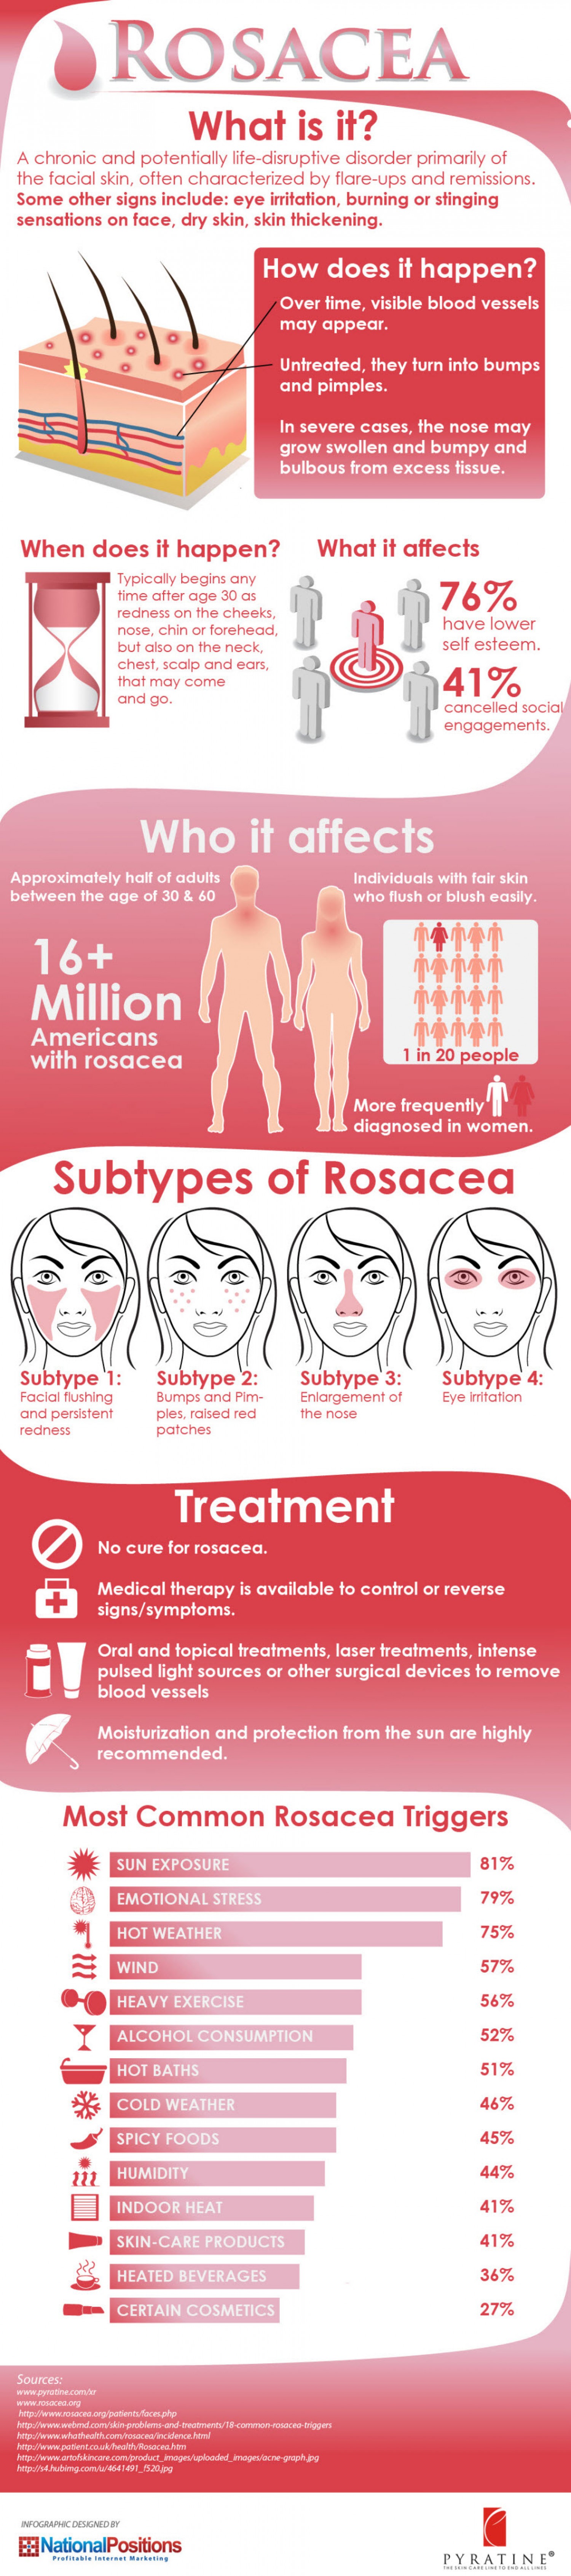 Rosacea symptoms and cure